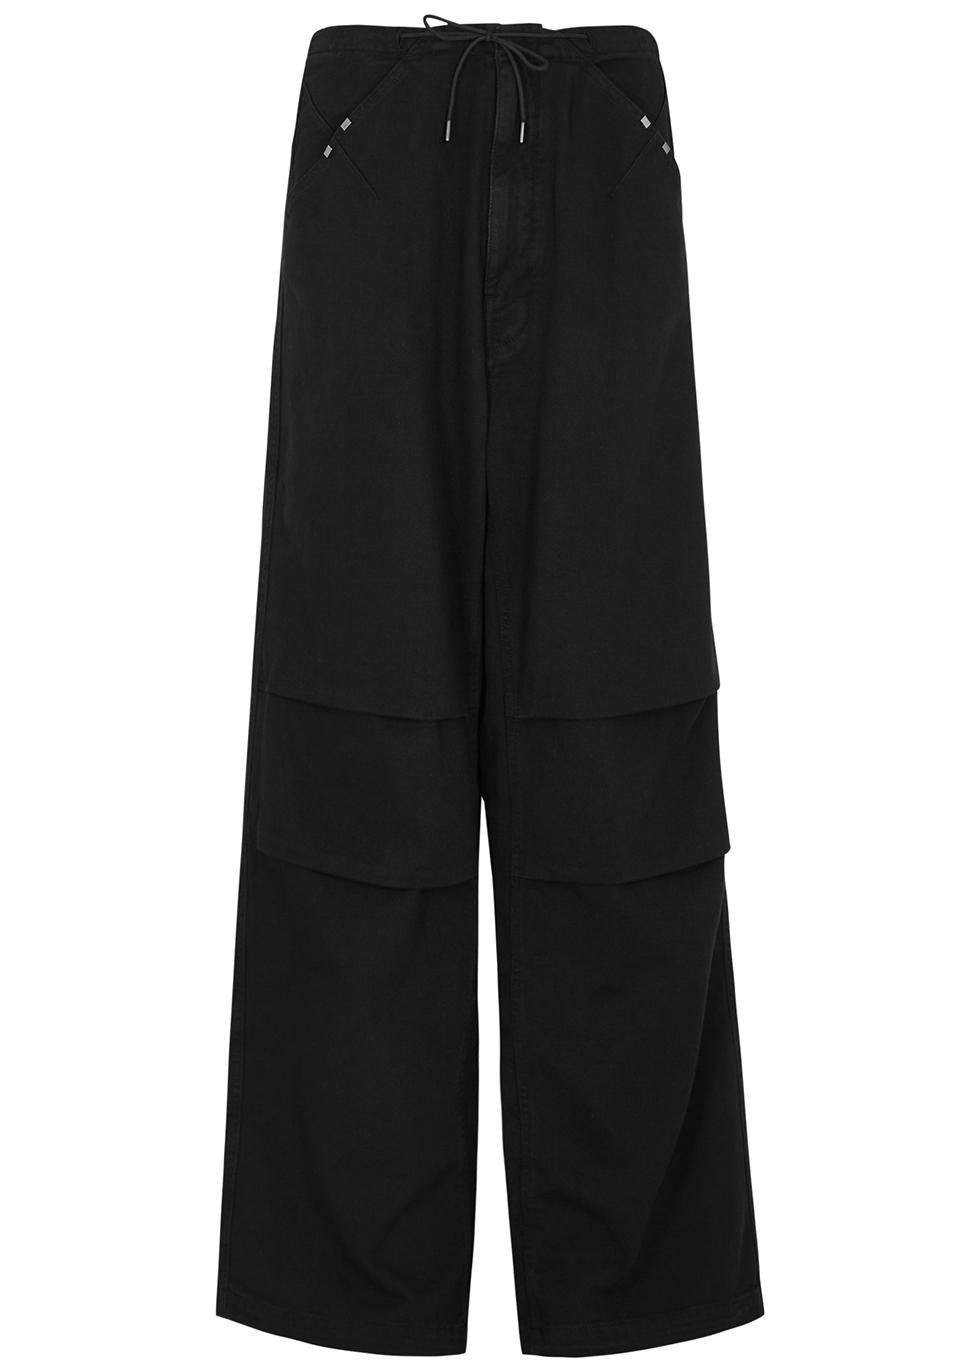 Daisy black wide-leg cotton trousers by DARKPARK